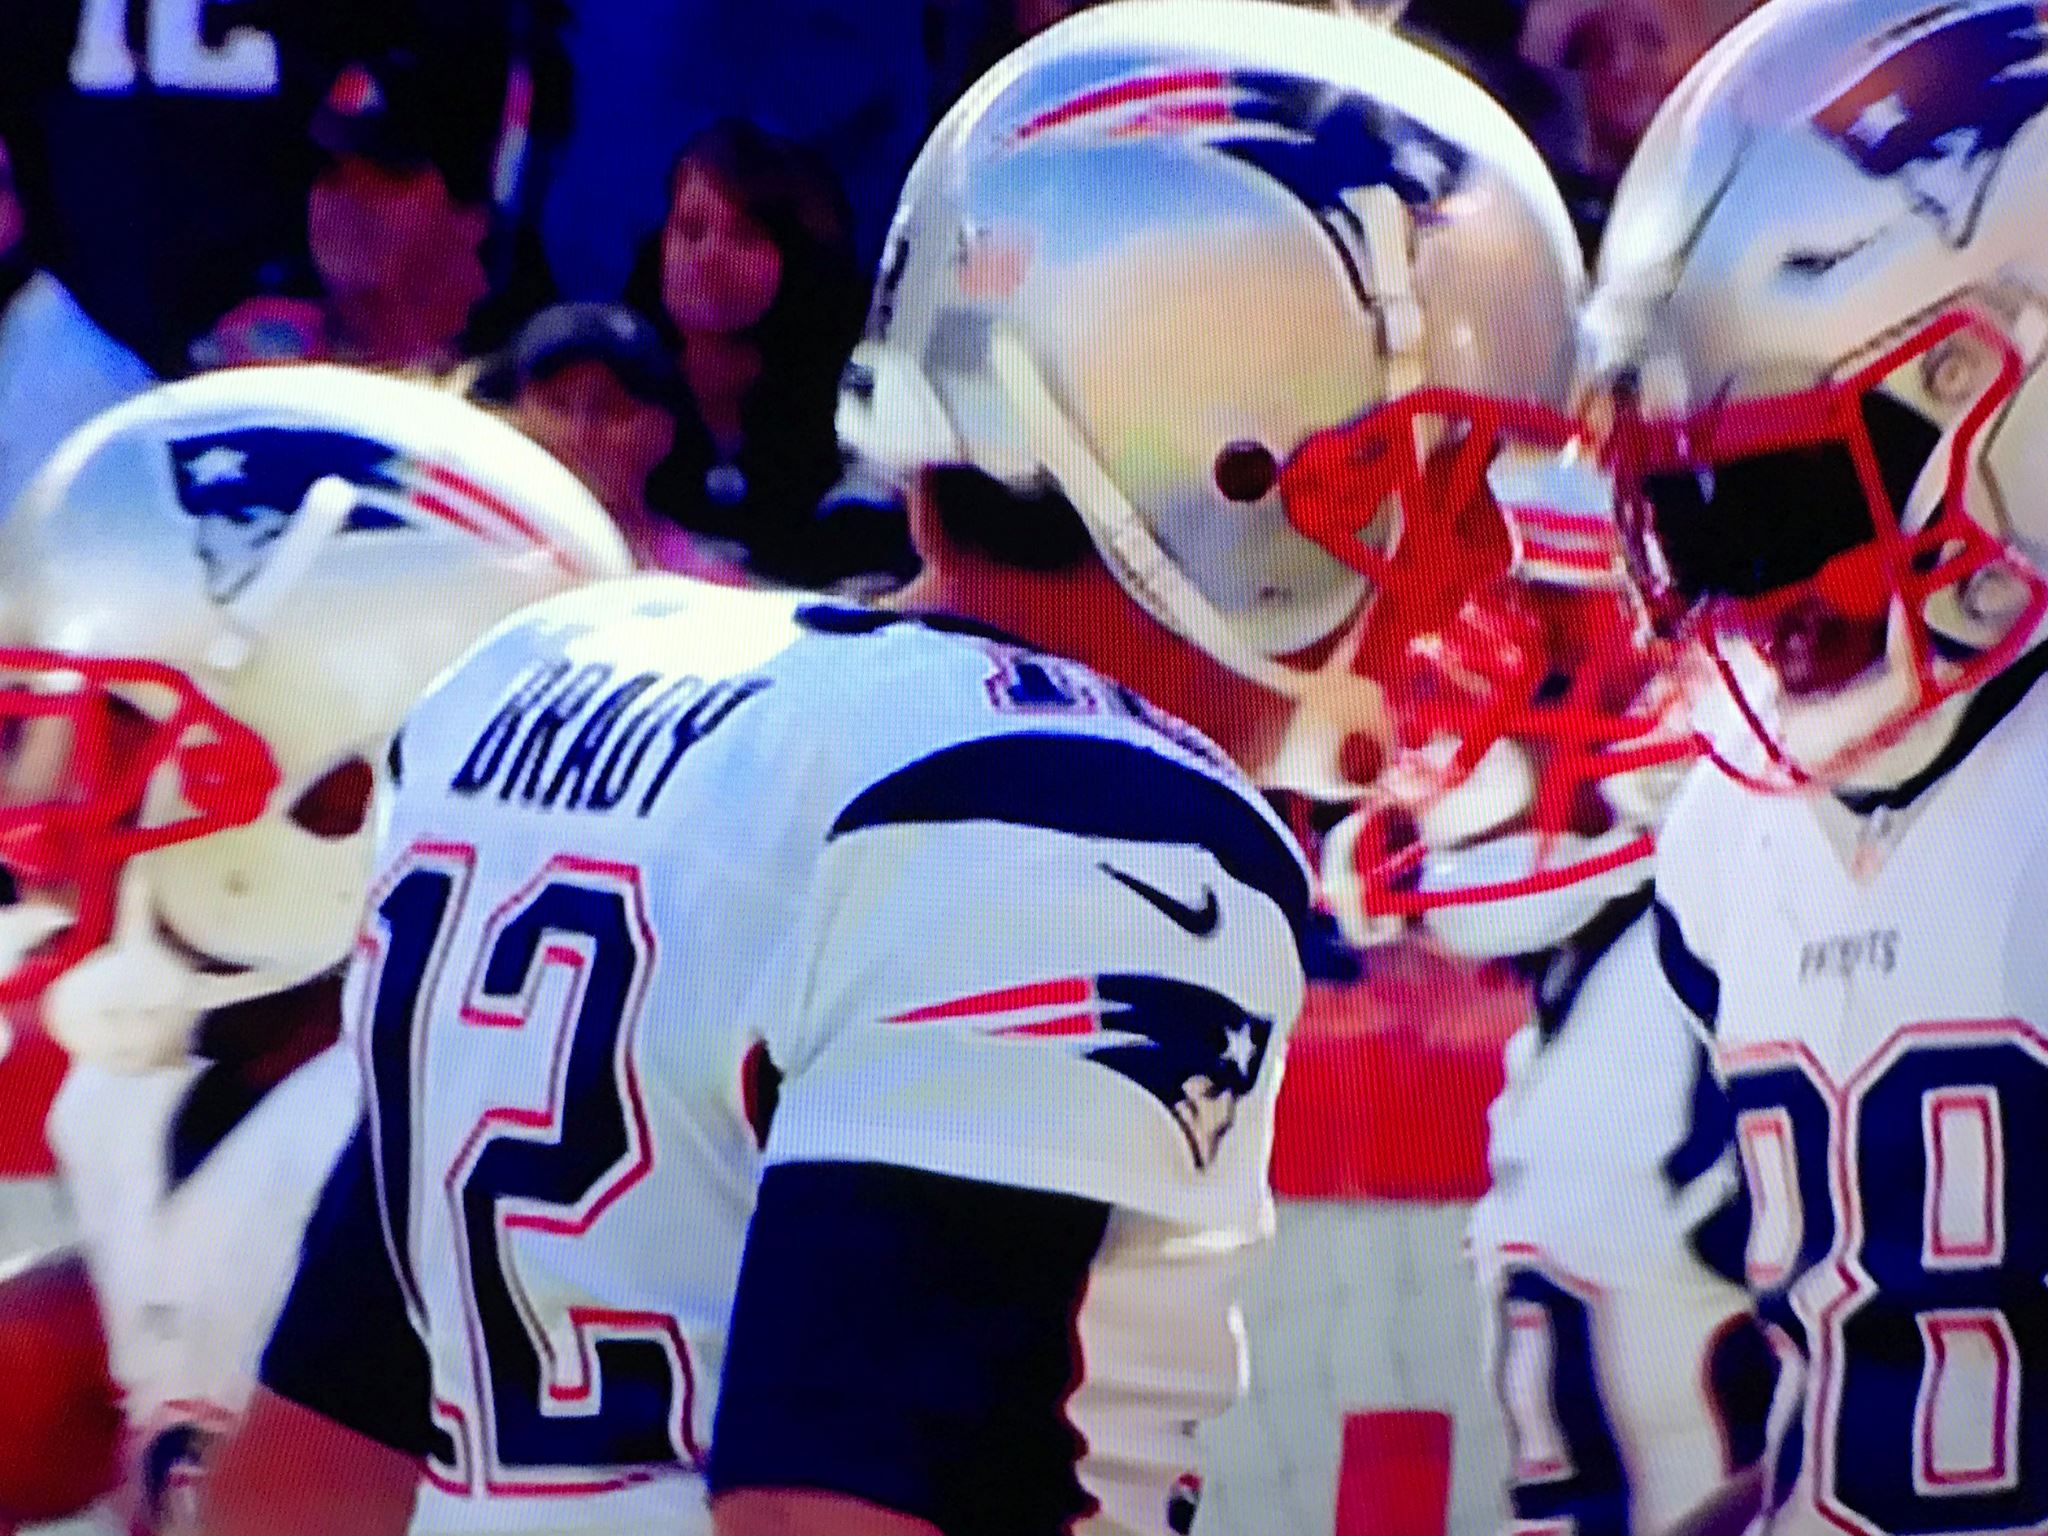 Photograph of Tom Brady and Patriots